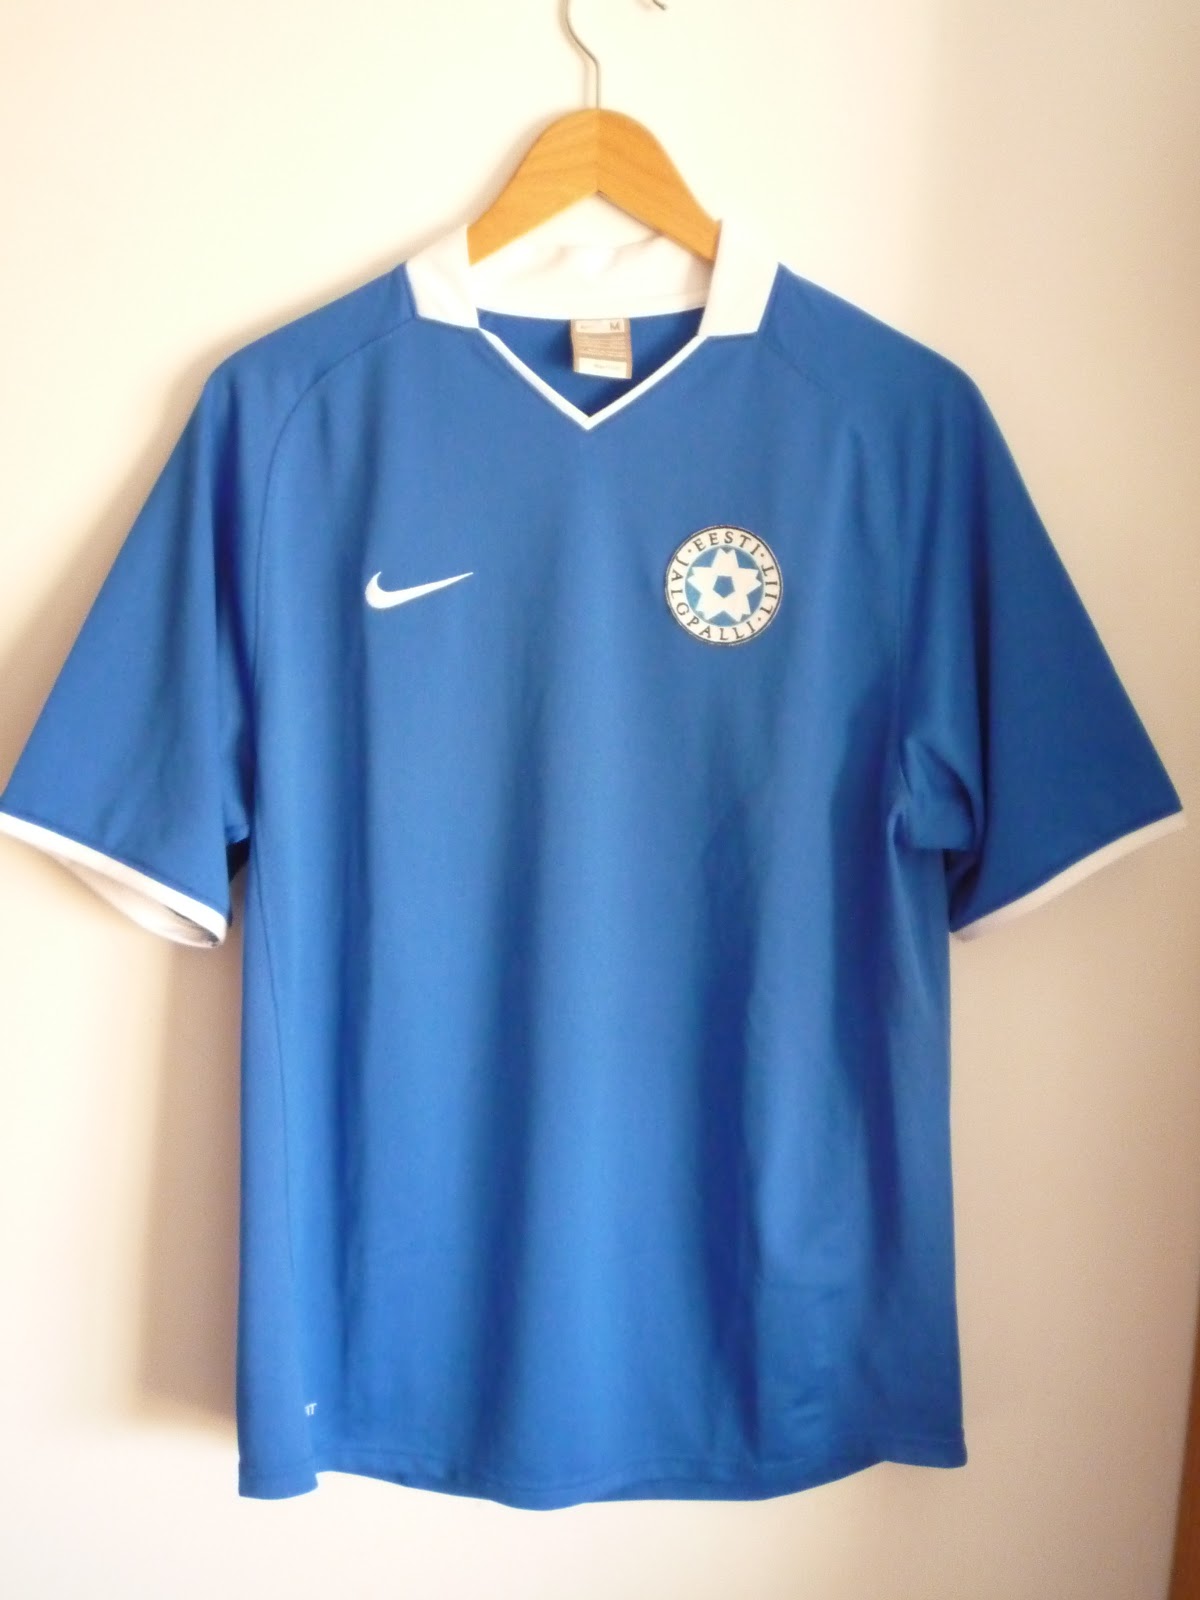 estonia football jersey